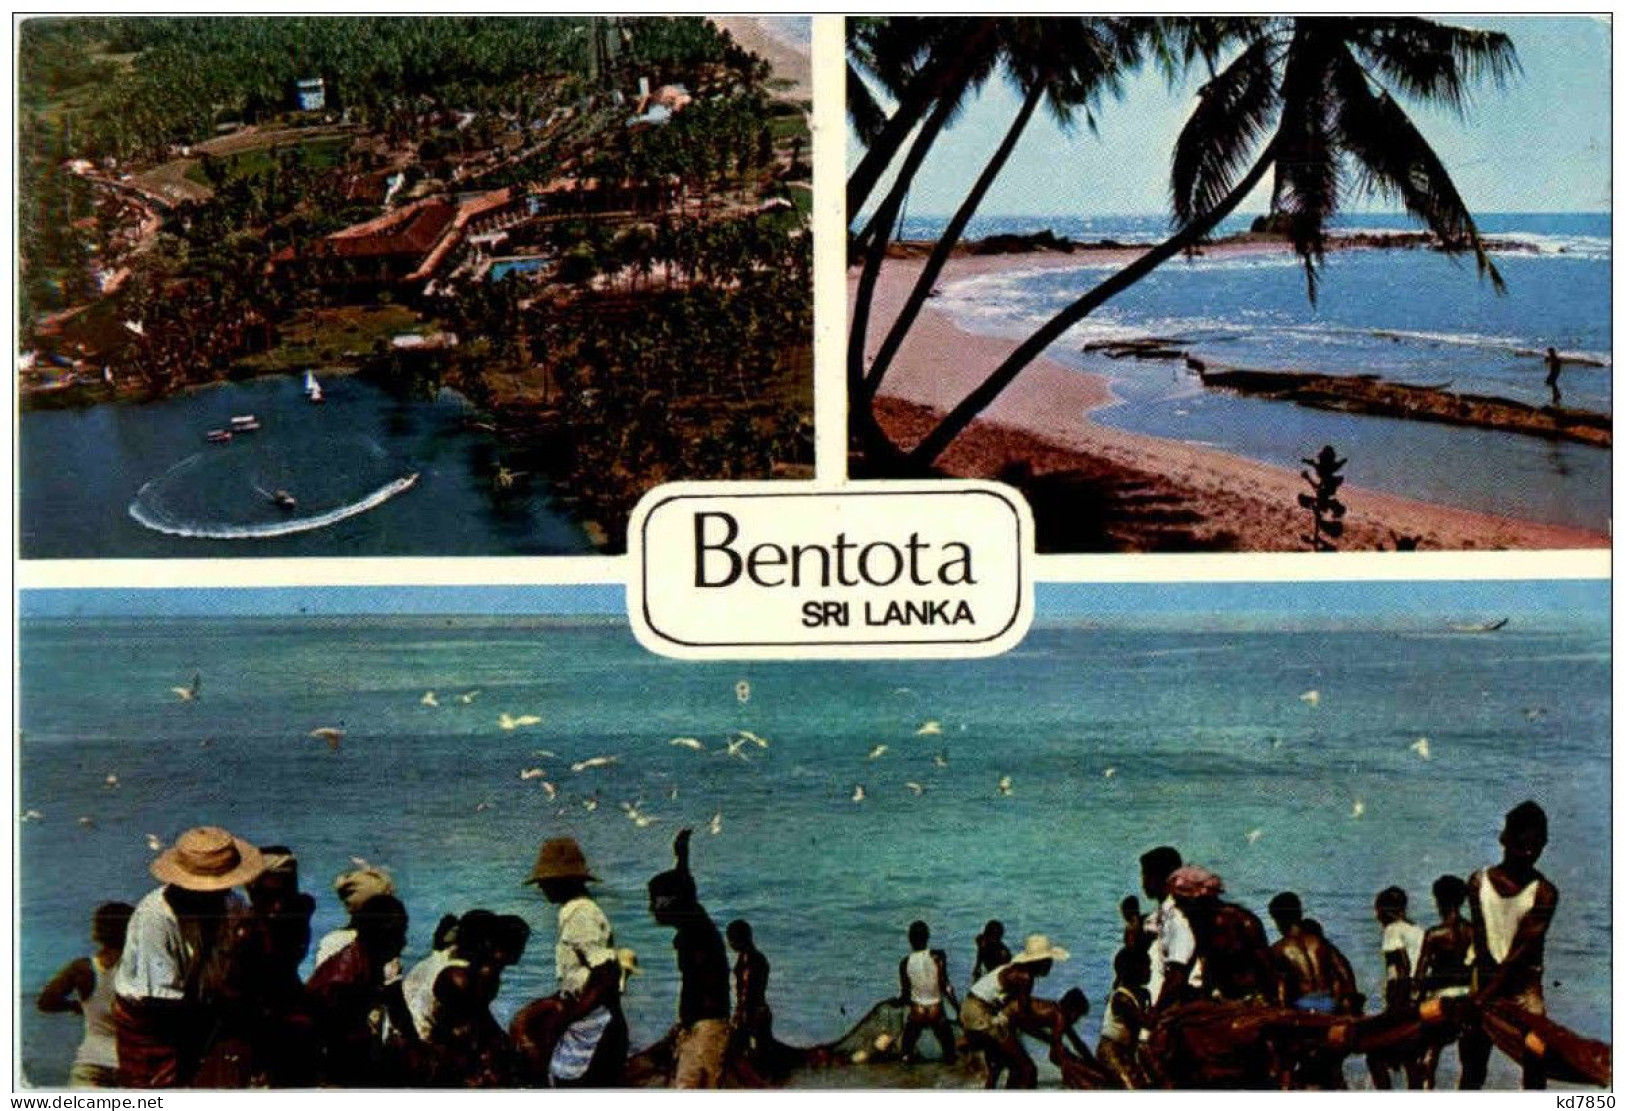 Bentota - Sri Lanka (Ceylon)